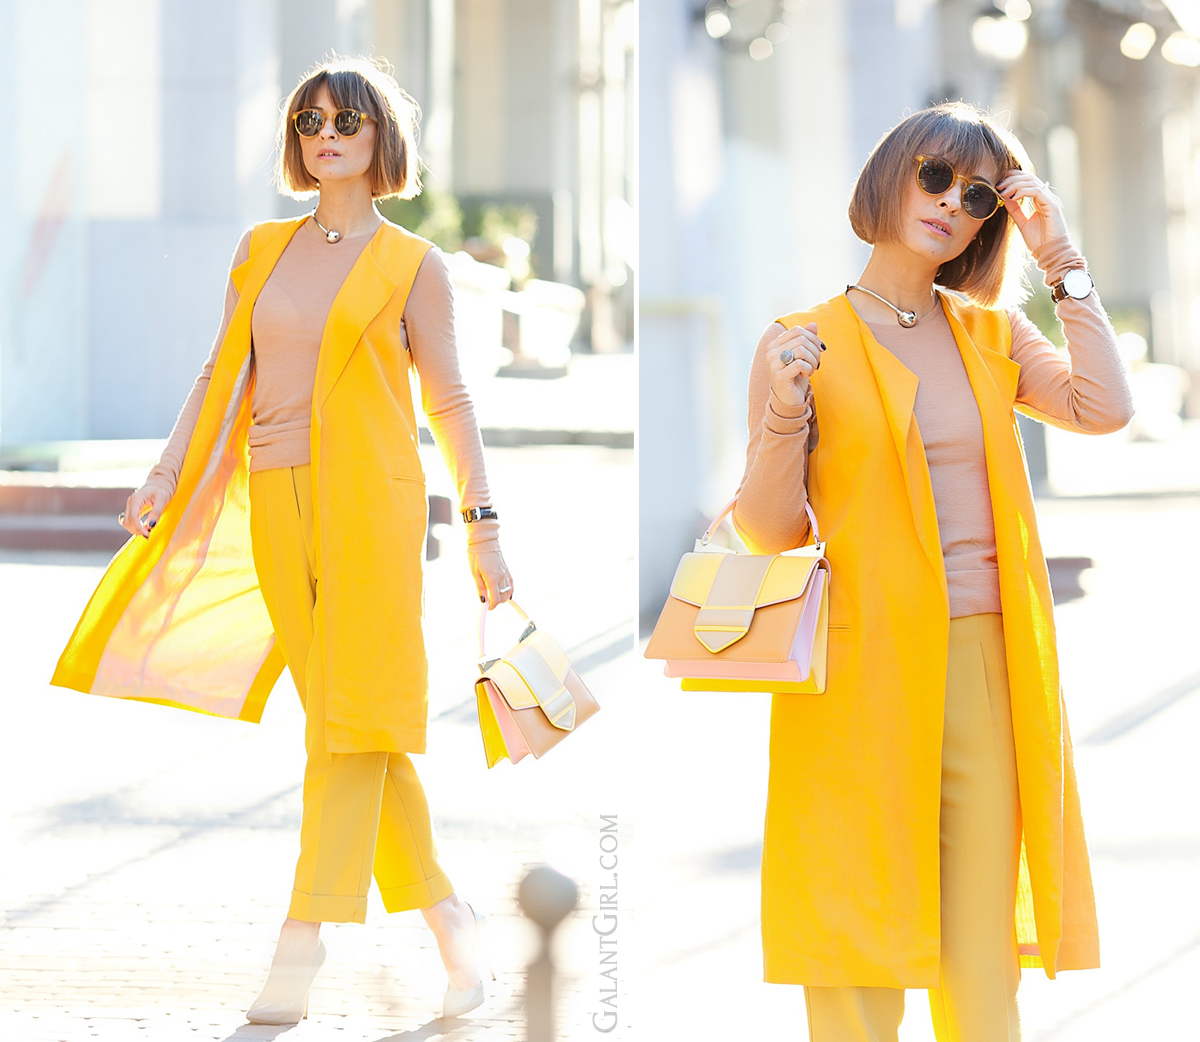 zara orange vest and sara battaglia bag, spring outfit, fashion trends 2015, galant girl